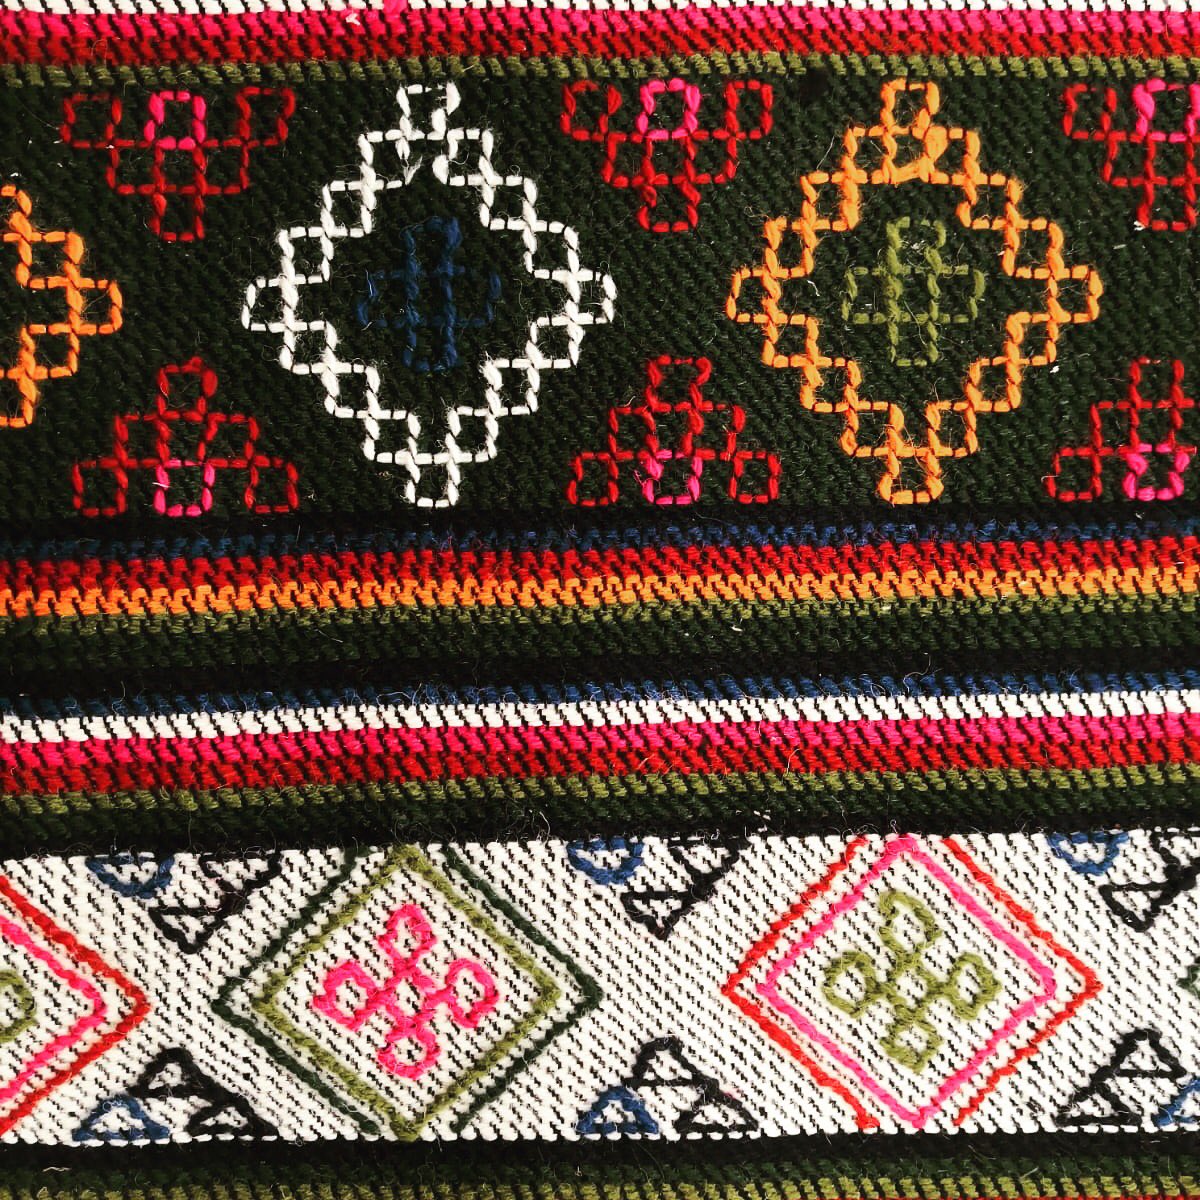 Bhutan yathra fabric and textile